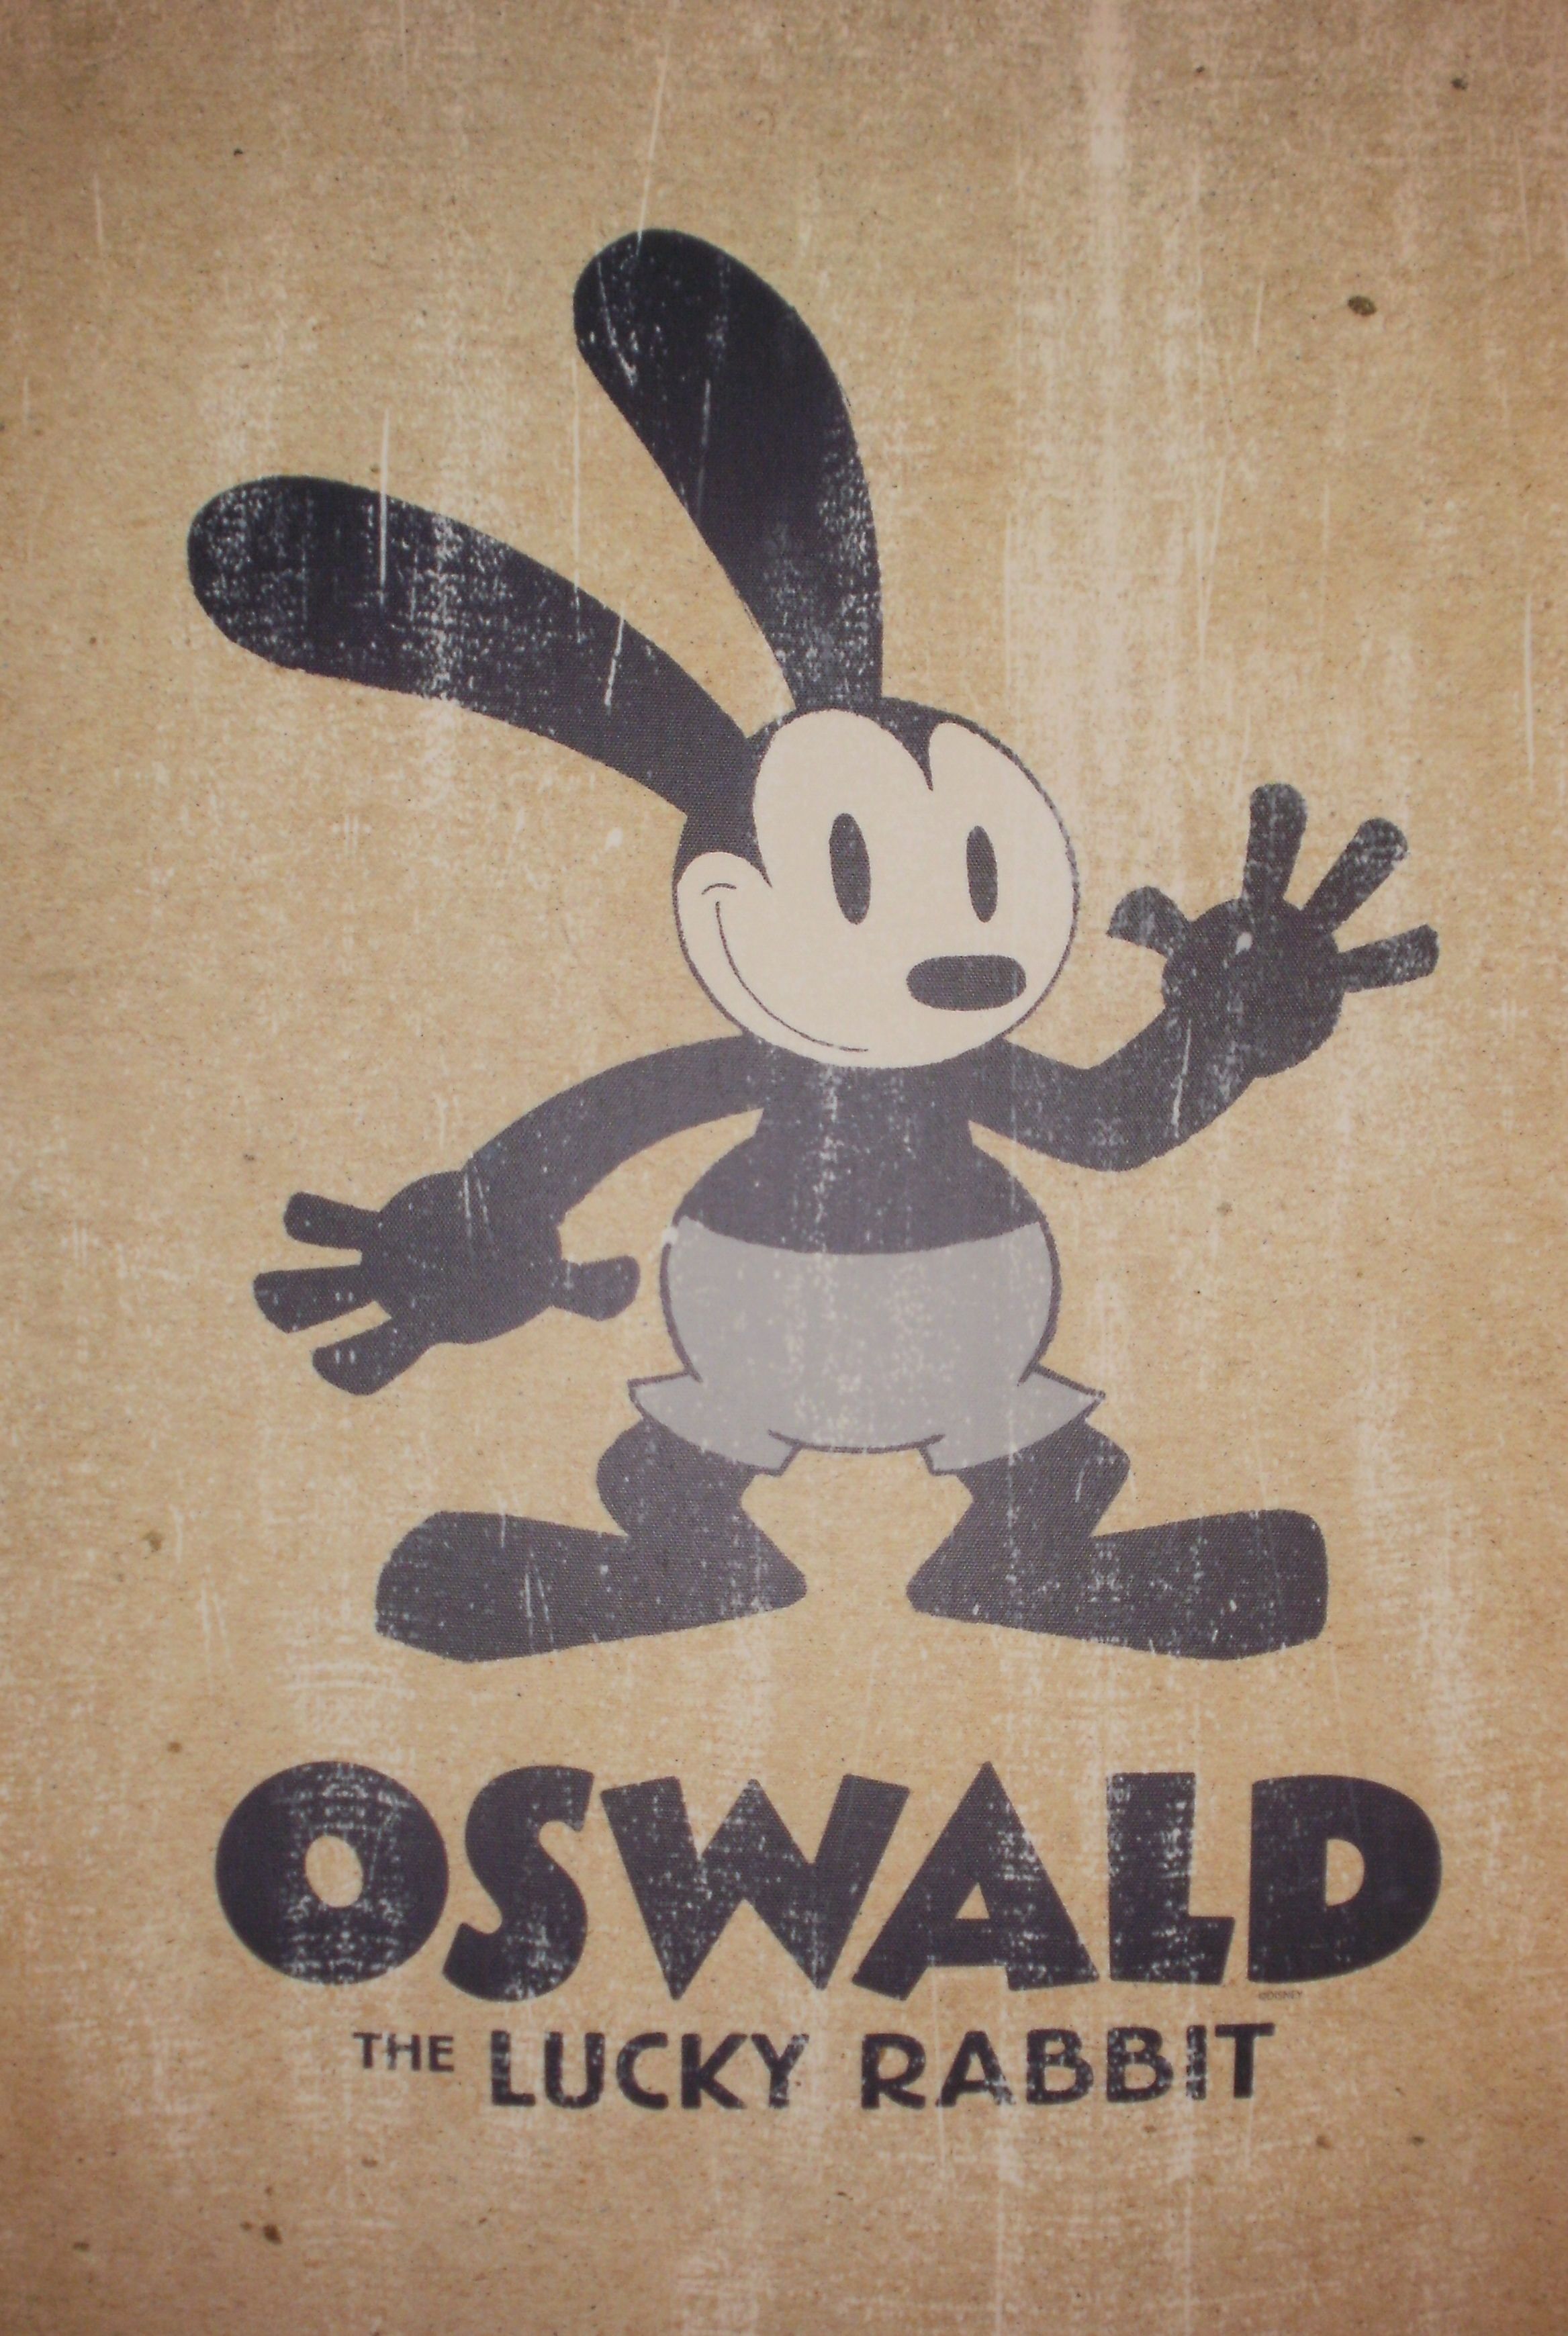 oswald the lucky rabbit - ディズニースケッチ